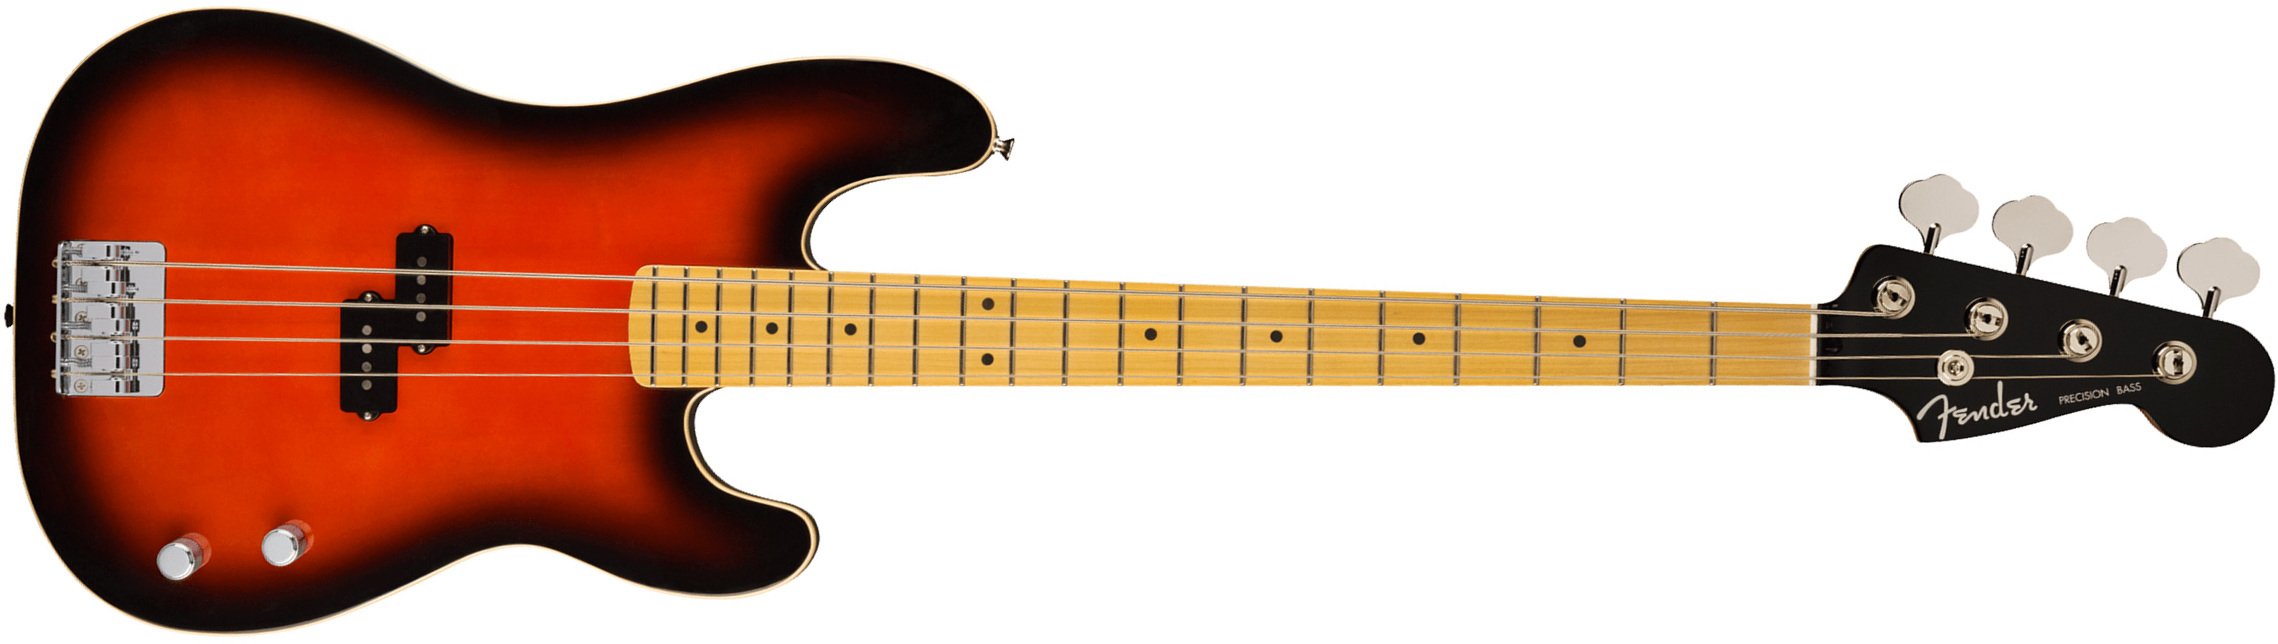 Fender Precision Bass Aerodyne Special Jap Mn - Hot Rod Burst - Solid body elektrische bas - Main picture